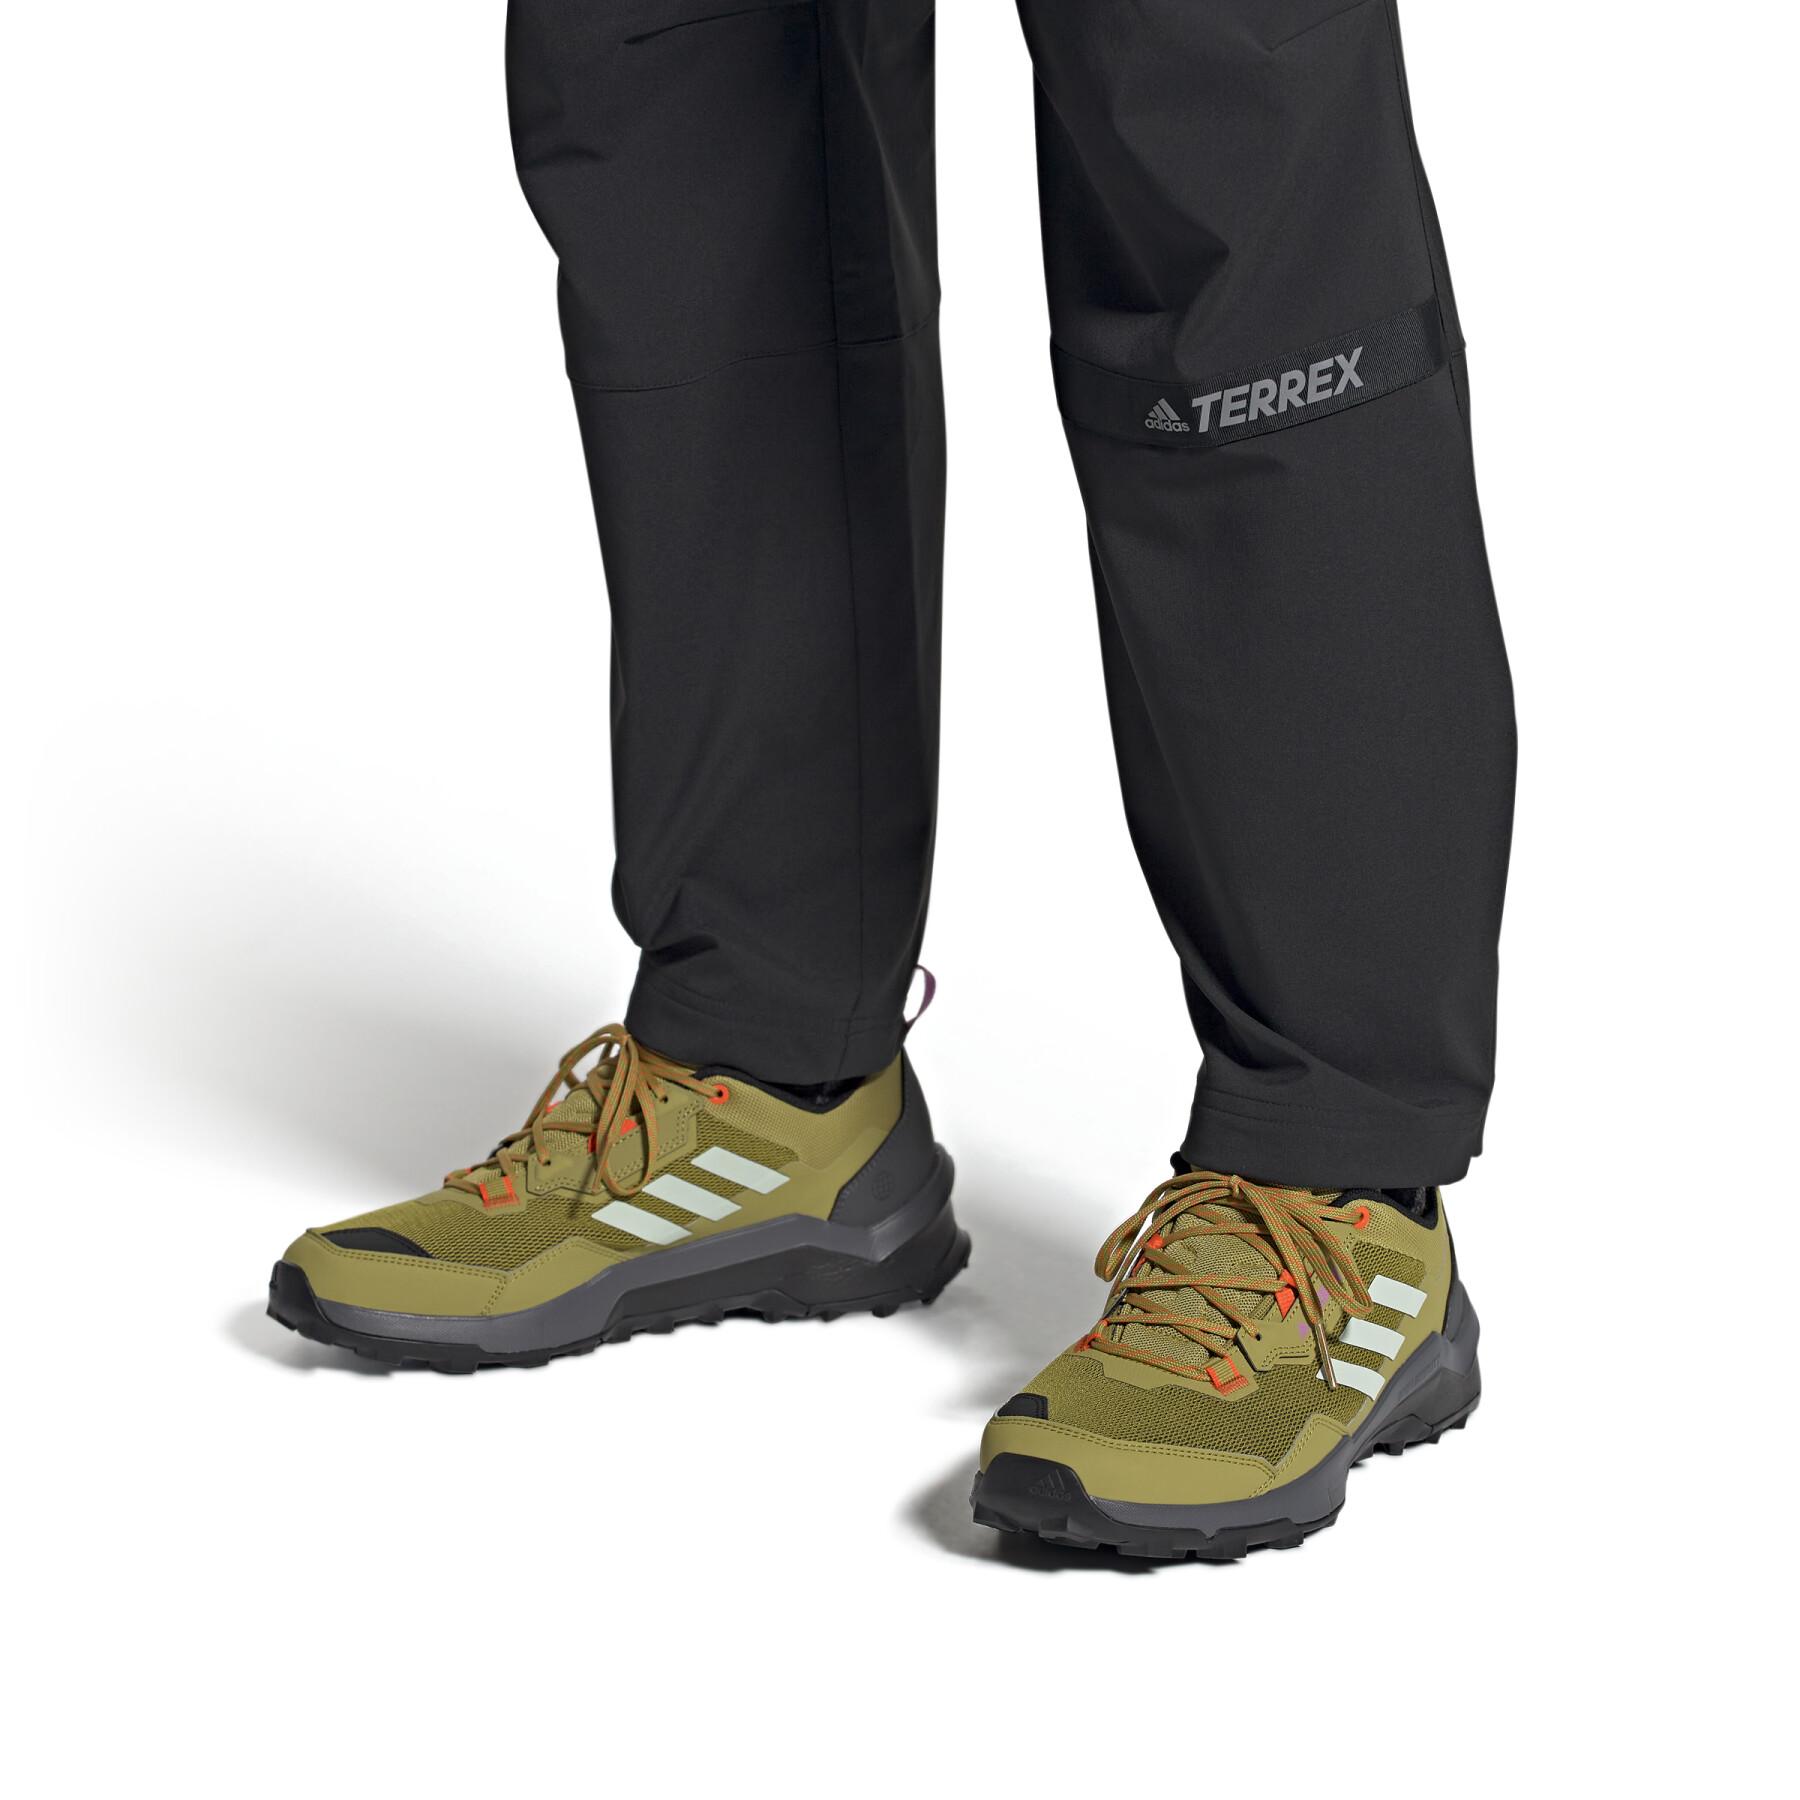 Sapatos para caminhadas adidas Terrex Ax4 Primegreen